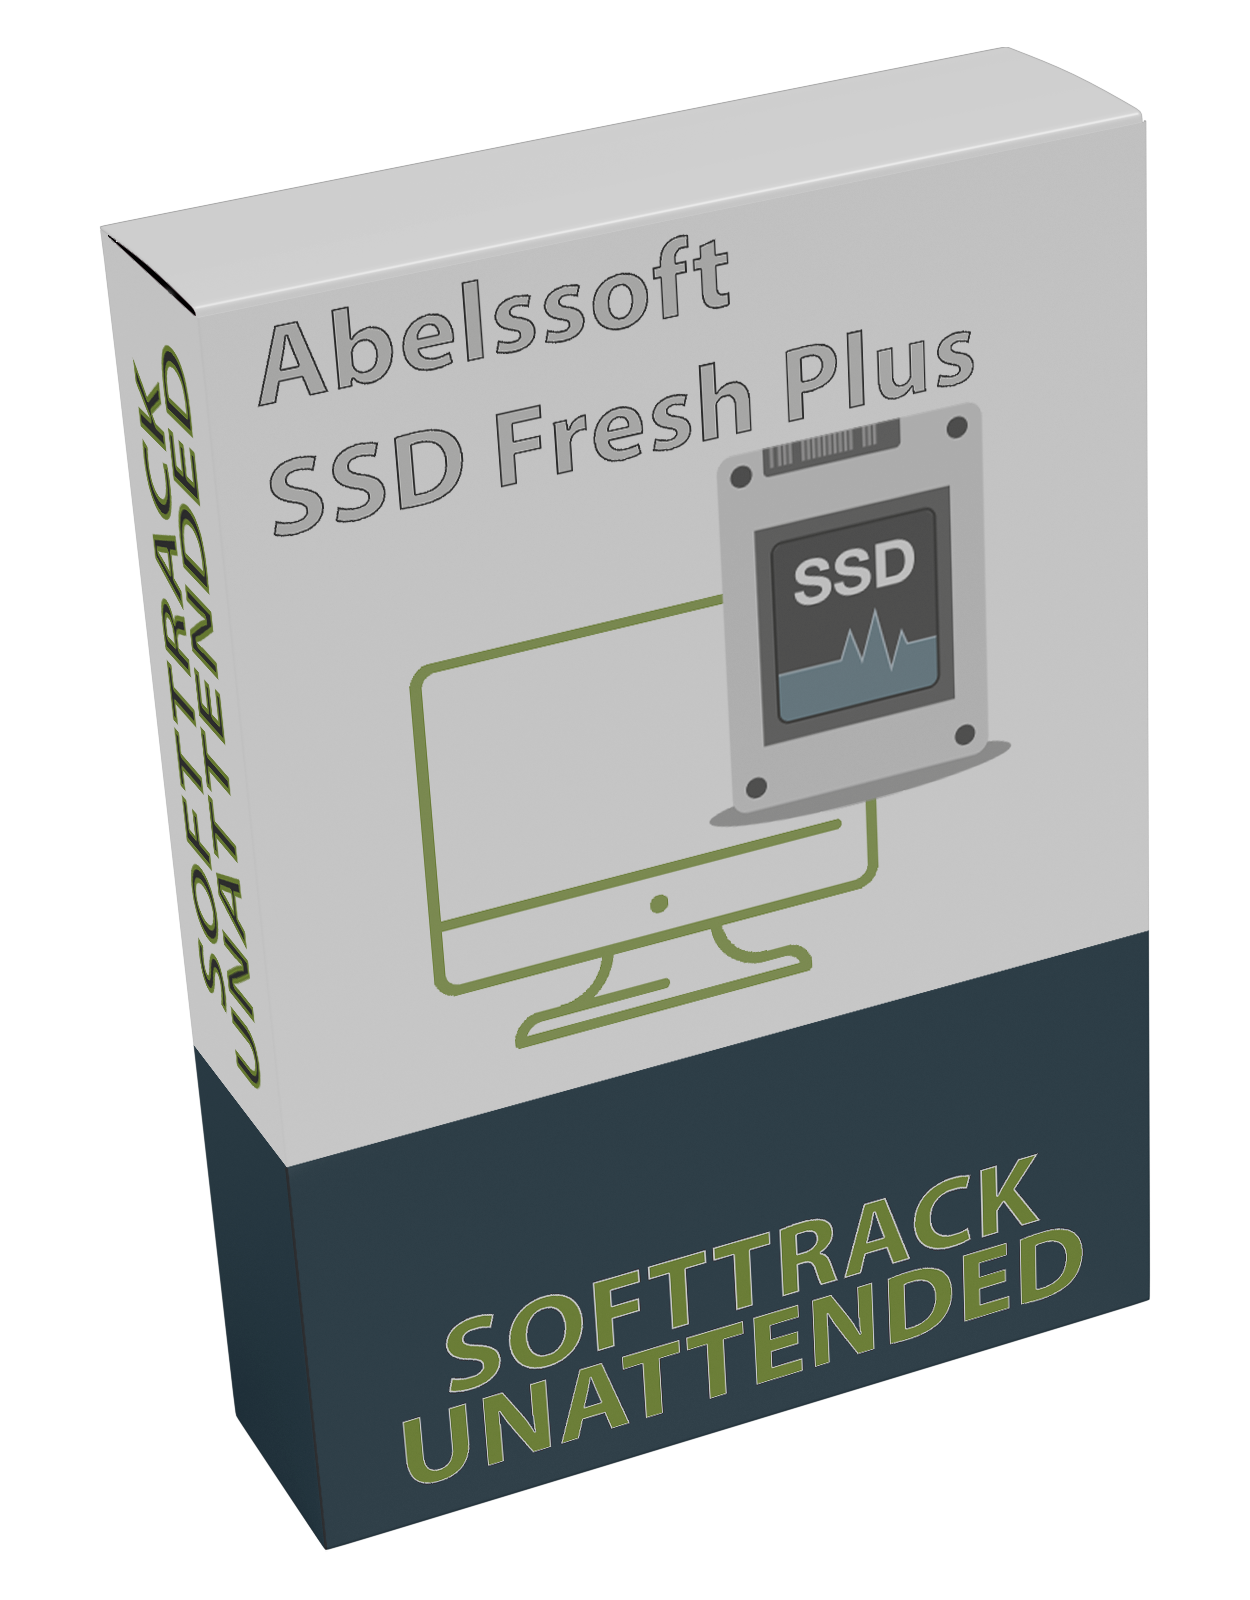 Abelssoft SSD Fresh Plus 2022 v11.07.34045 UNATTENDED